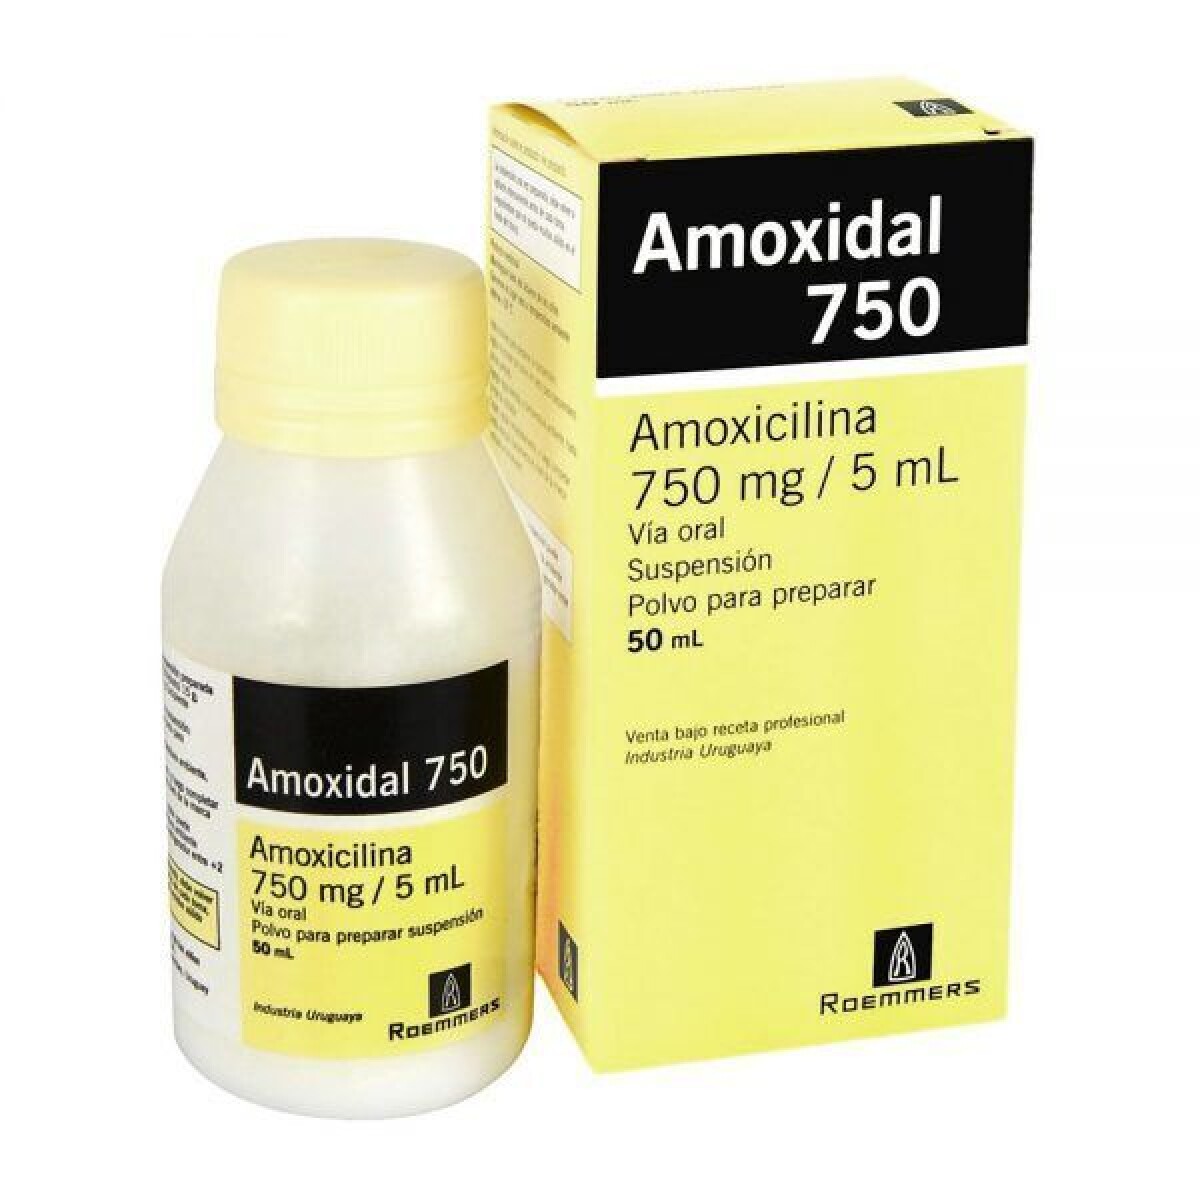 Amoxidal 750 Suspensión 50ml 